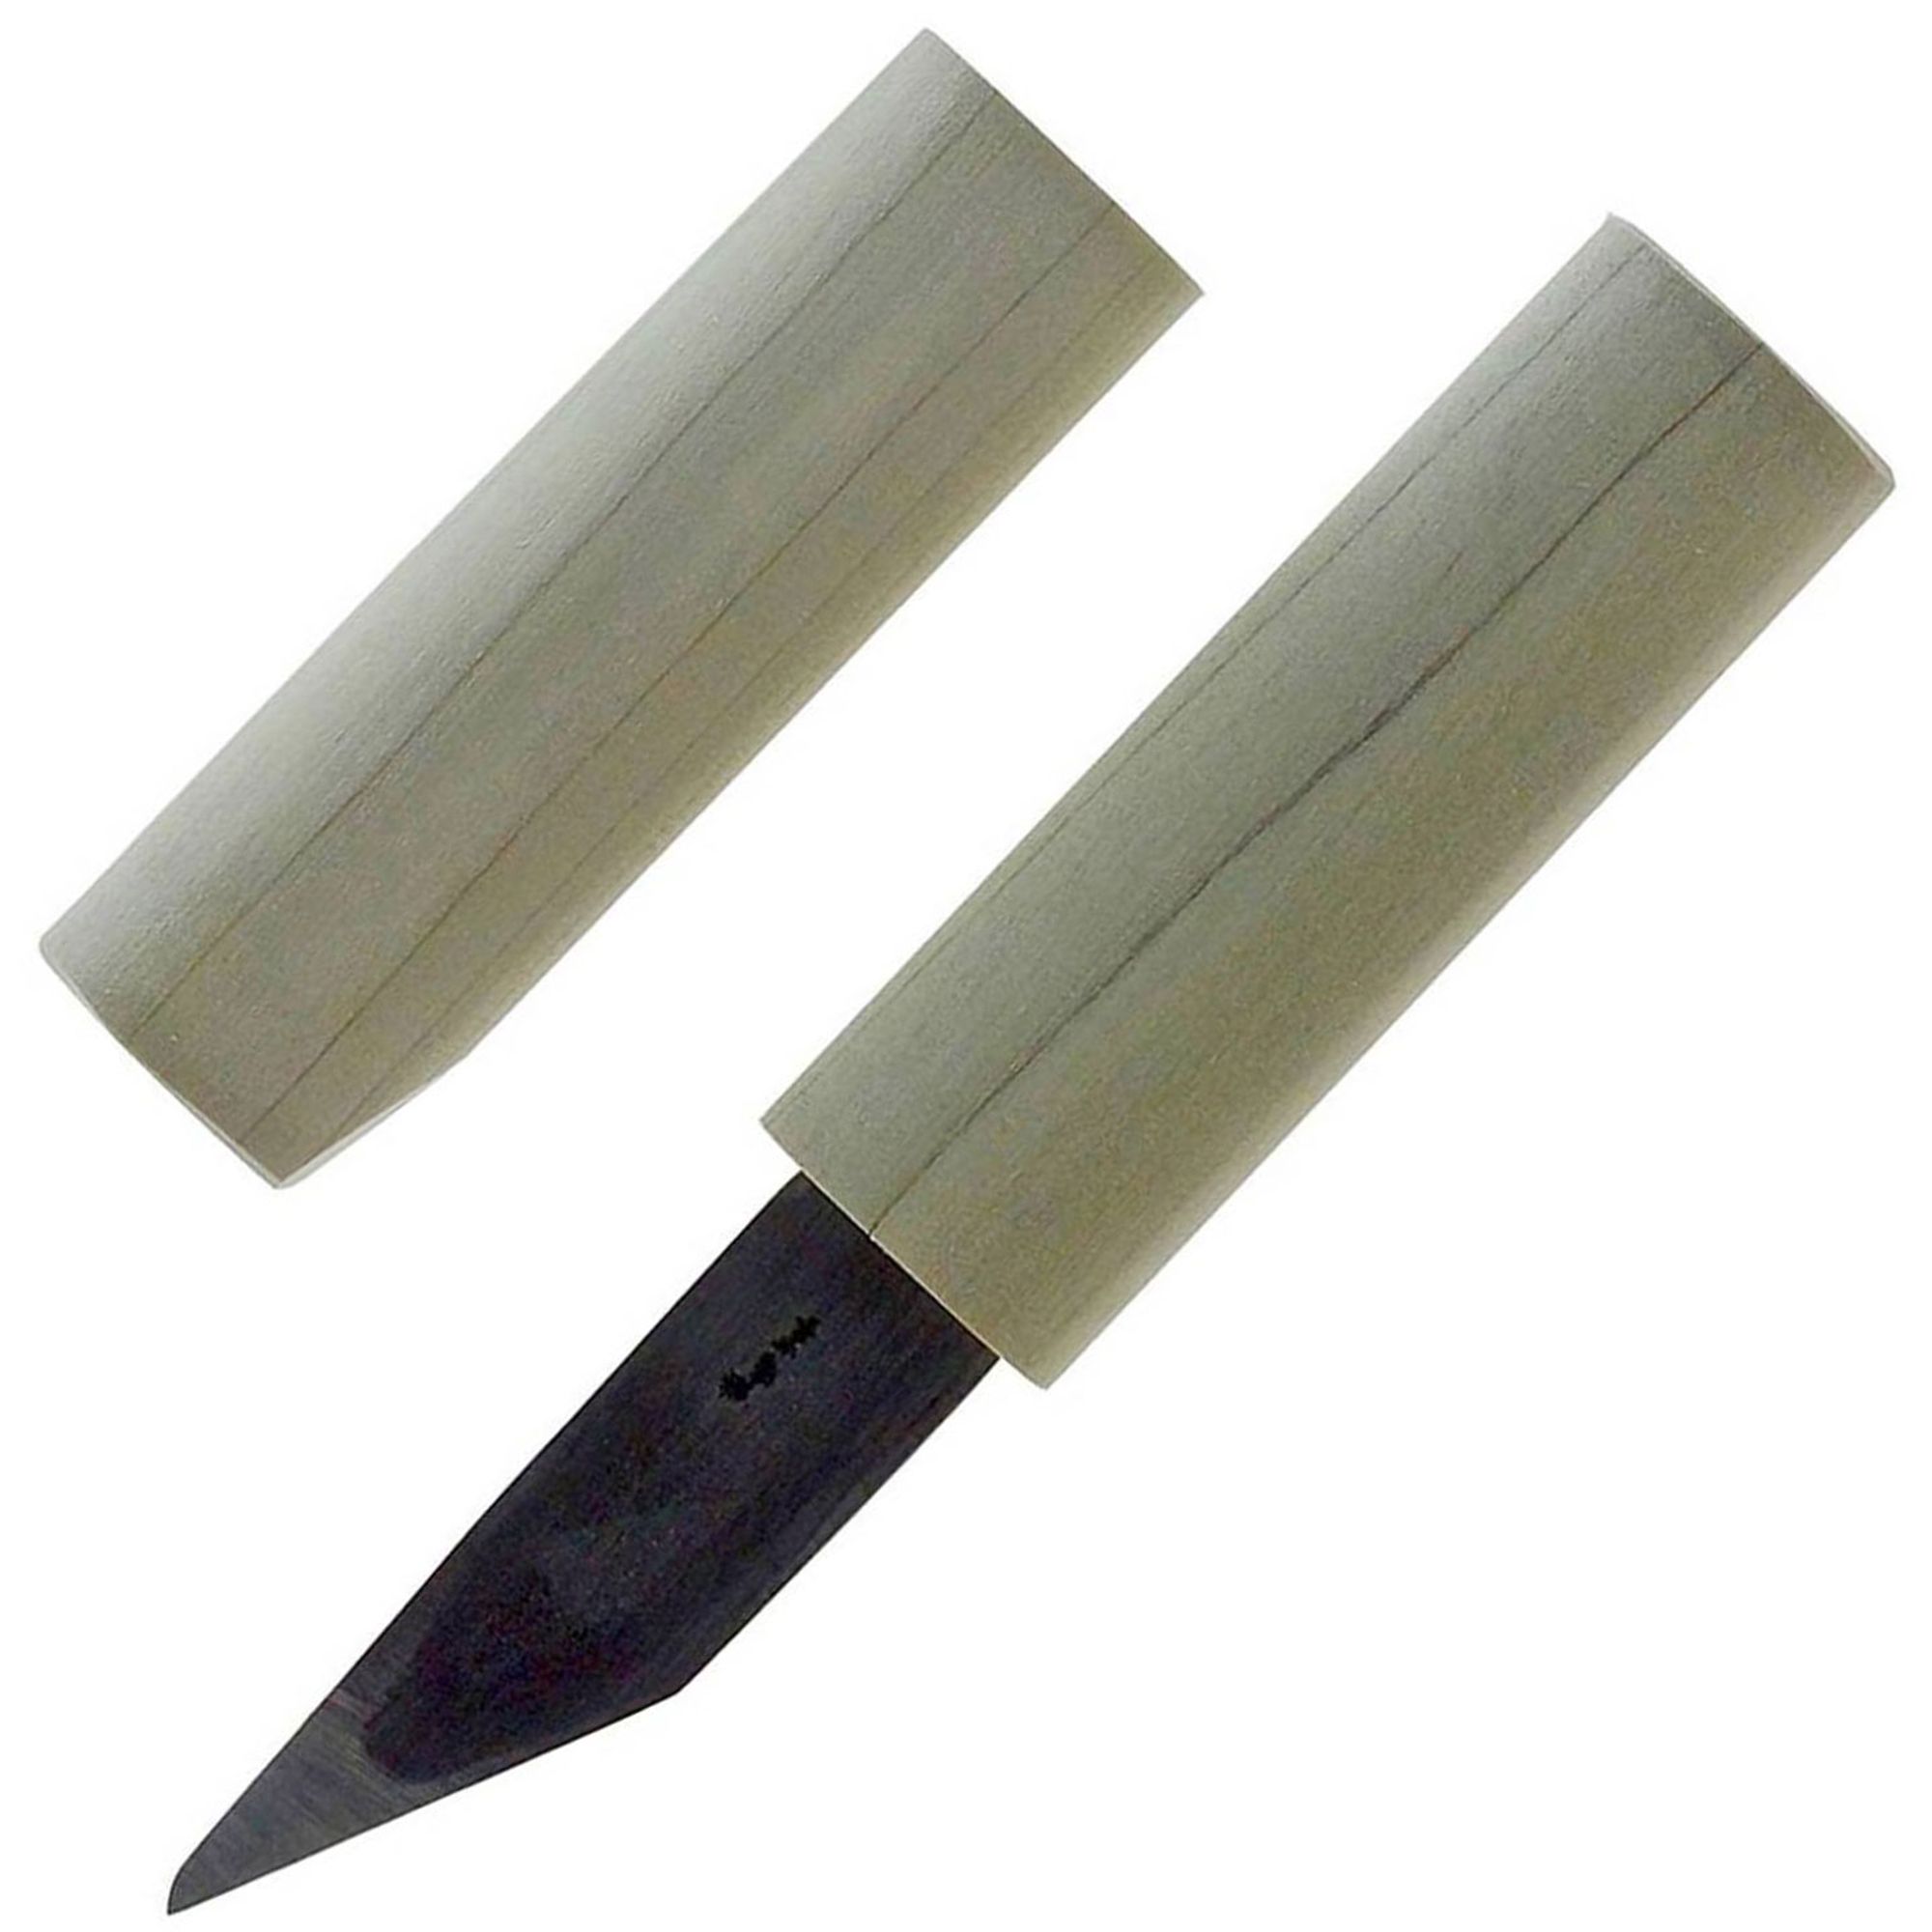 Woodworking Tool 175mm Small Japanese Kiridashi Kogatana Utility Knife, with Blade Sheath, for Wood Carving & Bamboo Craft